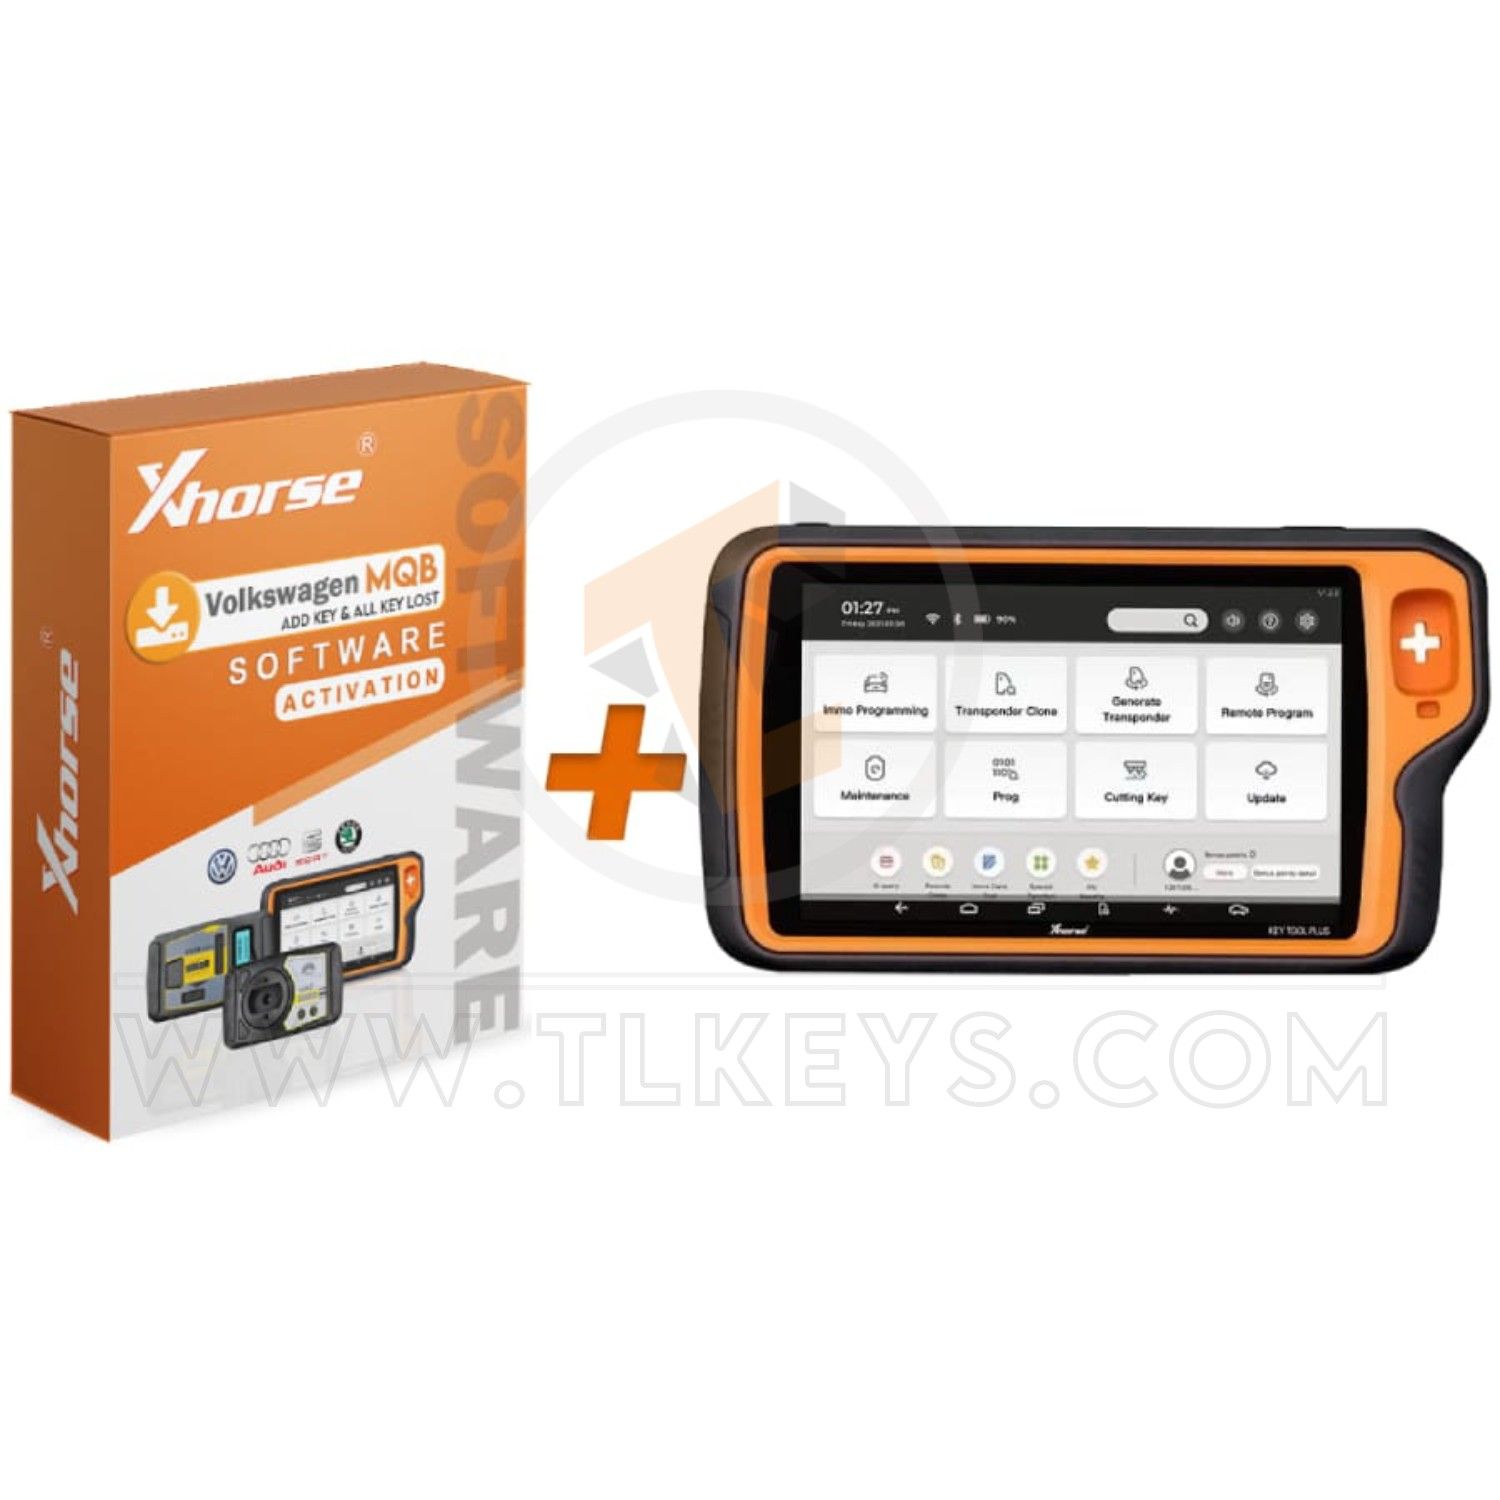 Xhorse VVDI Key Tool Plus & Volkswagen MQB software